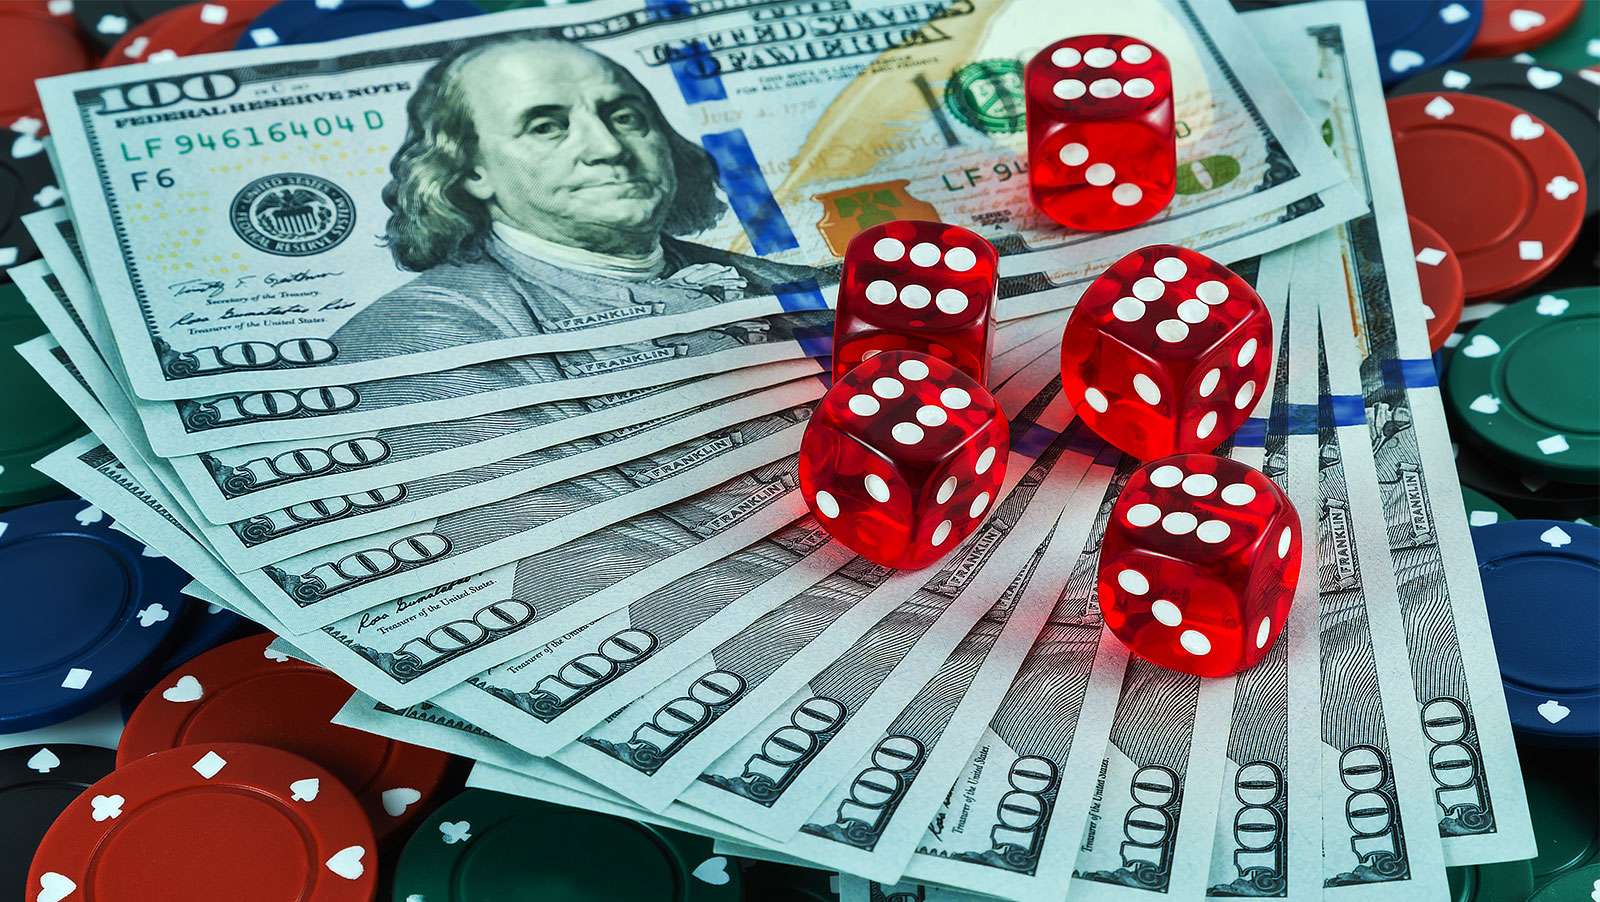 British MPs Want Gambling Caps At £50 A Day - Golden Casino News